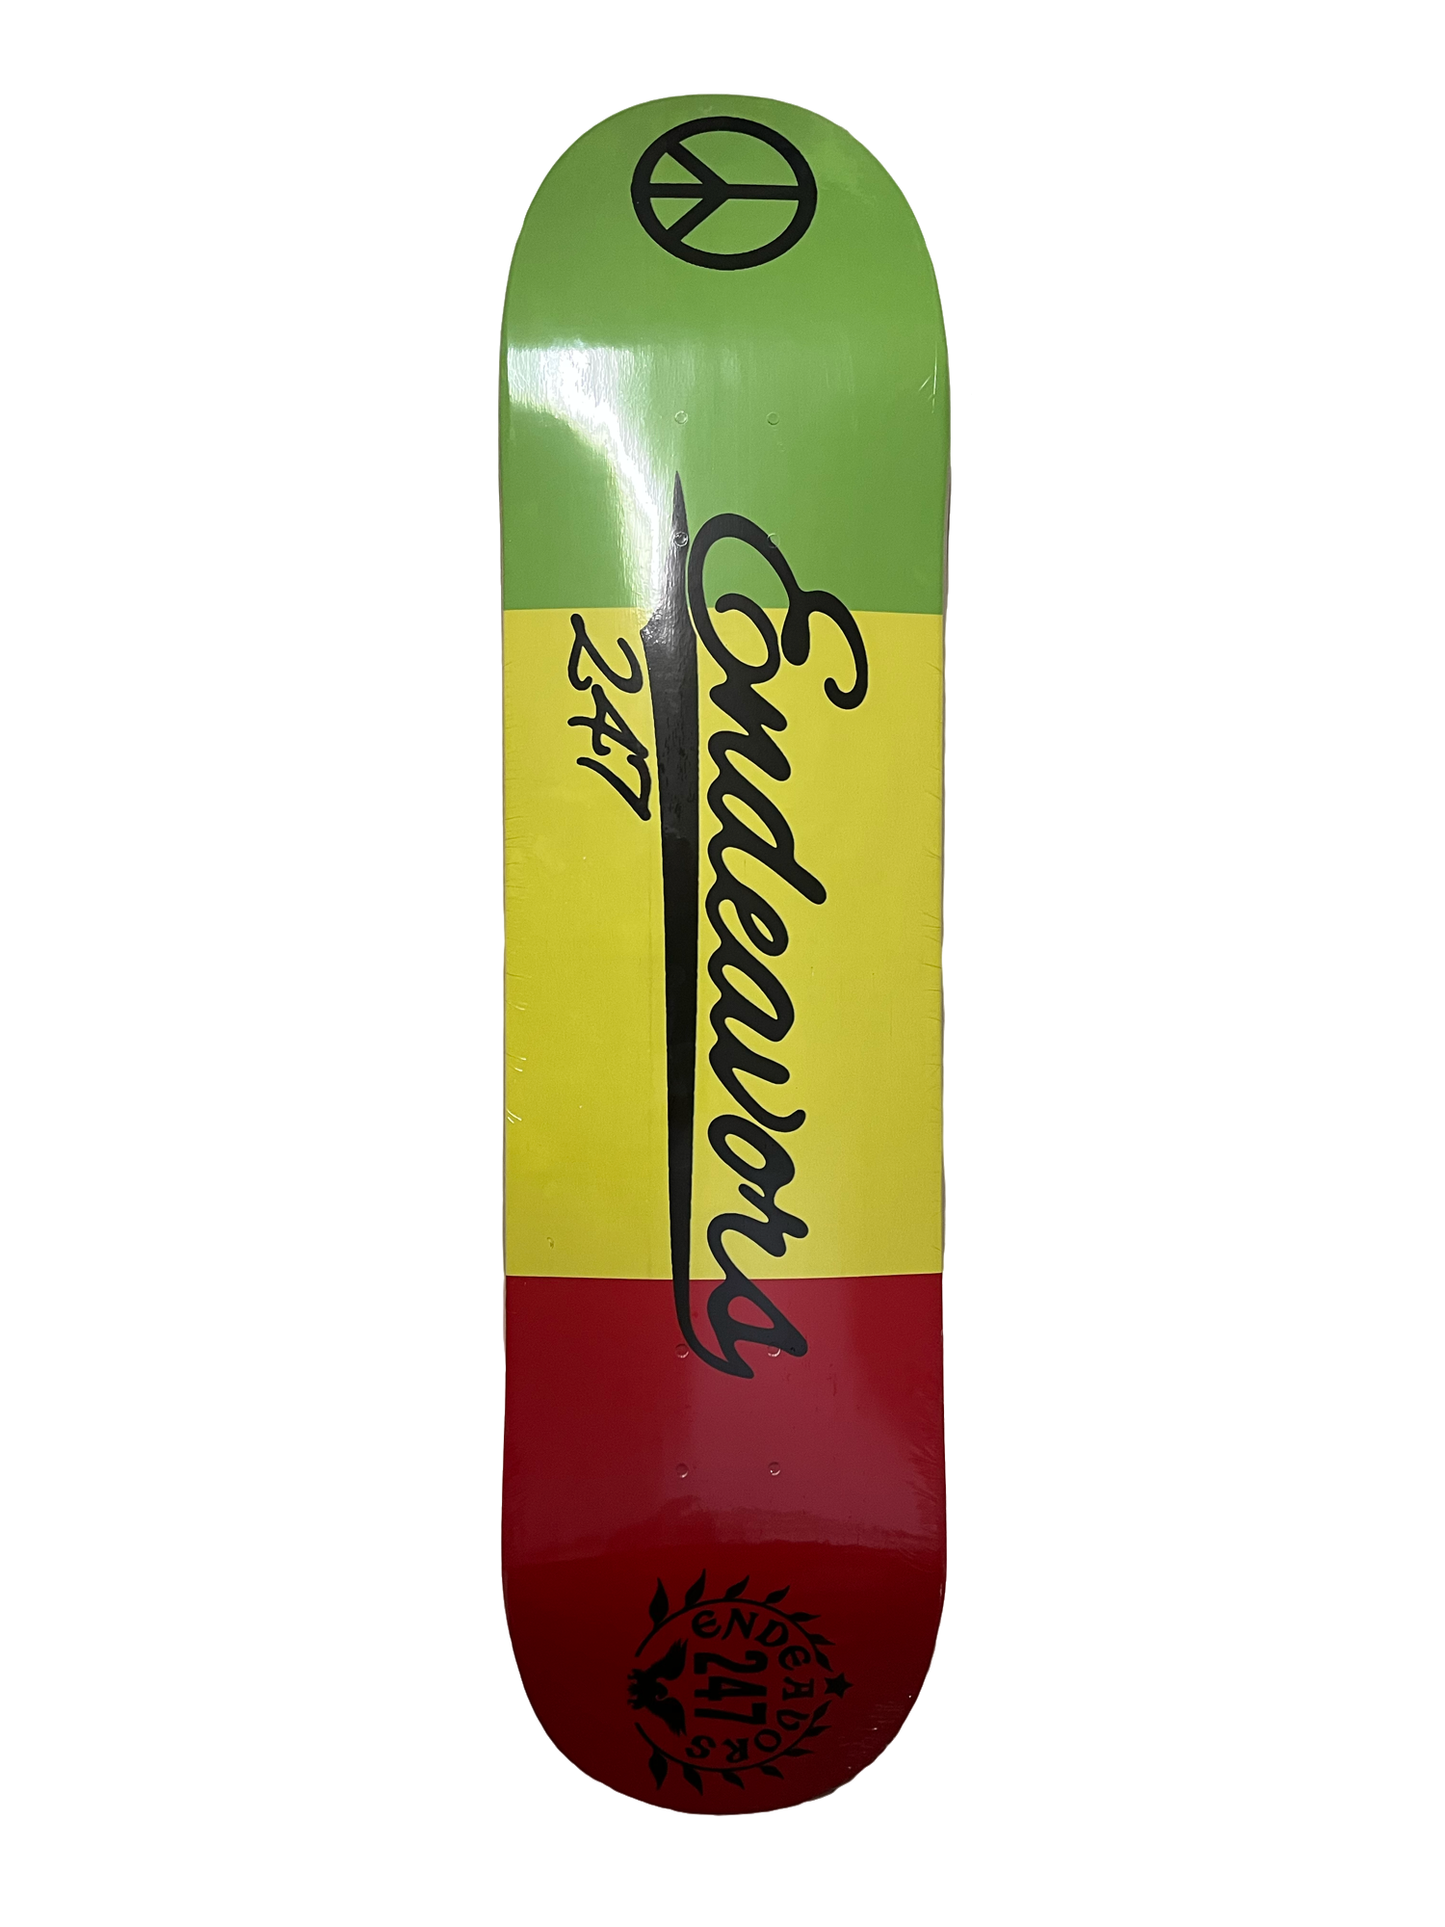 Endeavors247 Skateboard Deck - Choose One